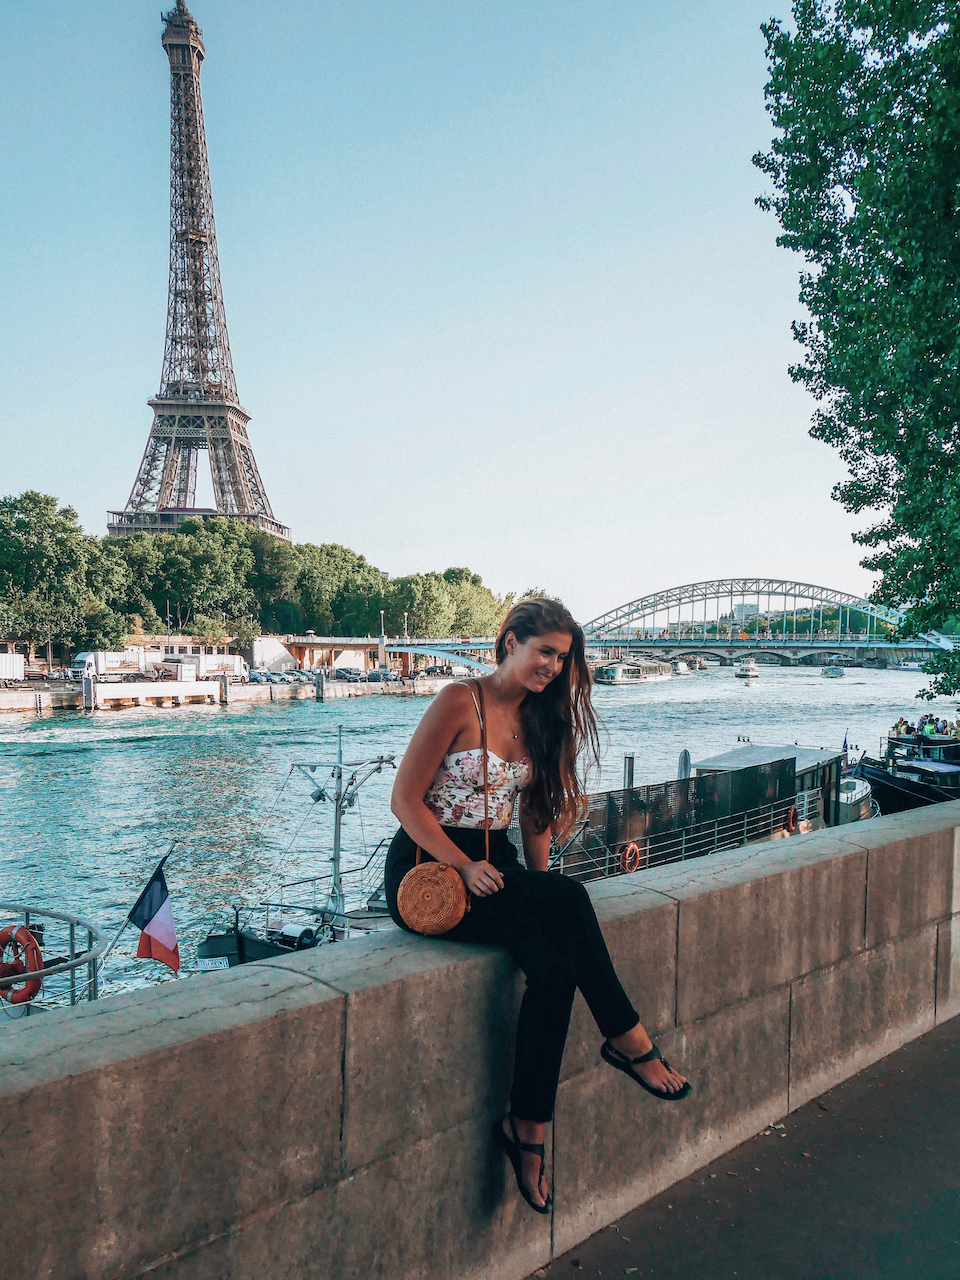 Eiffel Tower and Debilly Footbridge - Paris - France